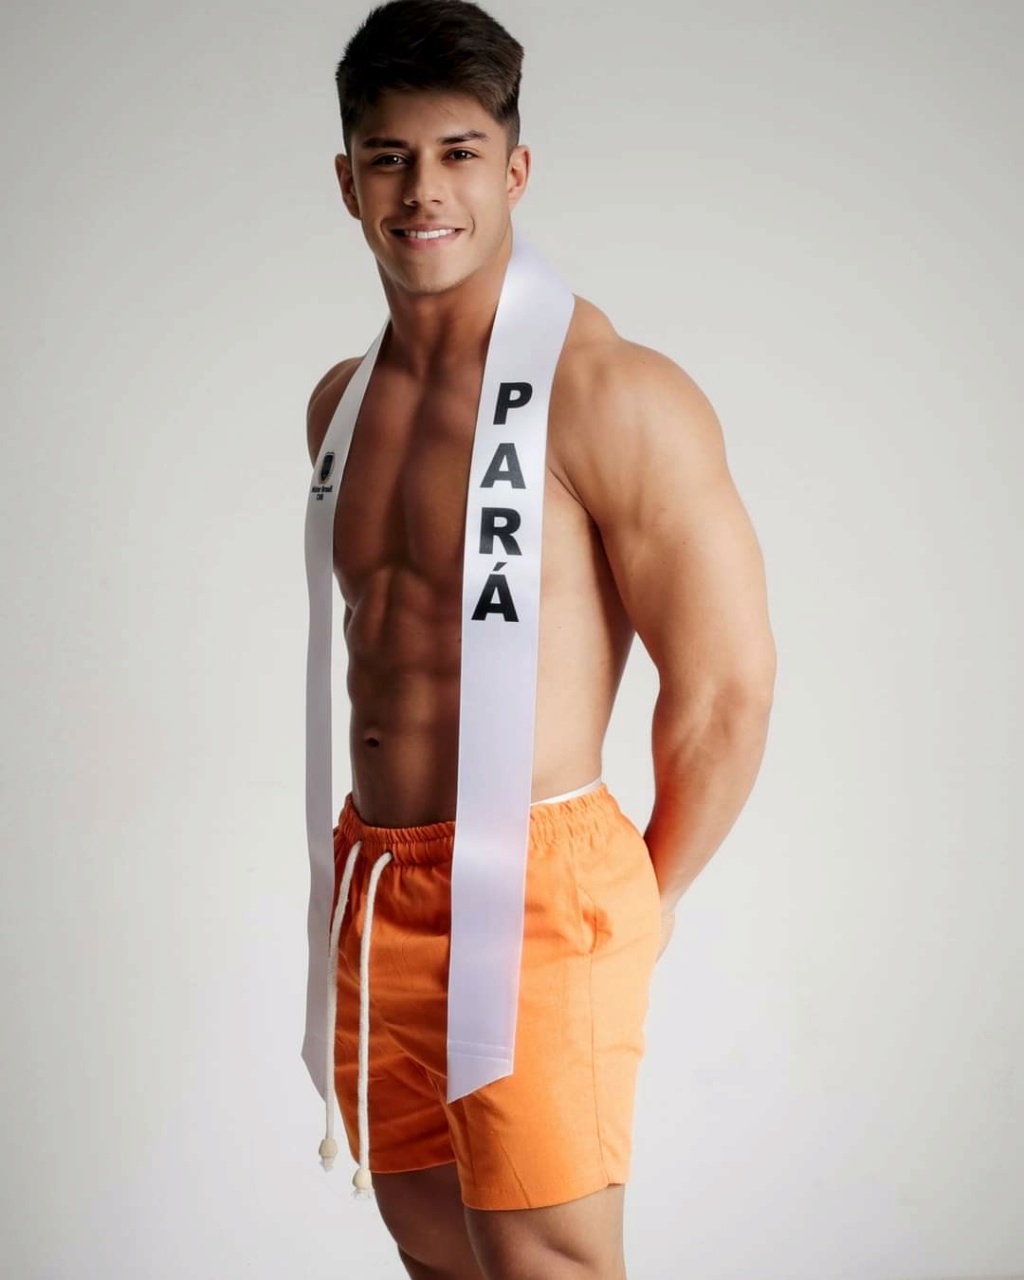 Mister Brasil CNB 2023 is  São Paulo, Henrique Martins - Page 3 Fb_i1345